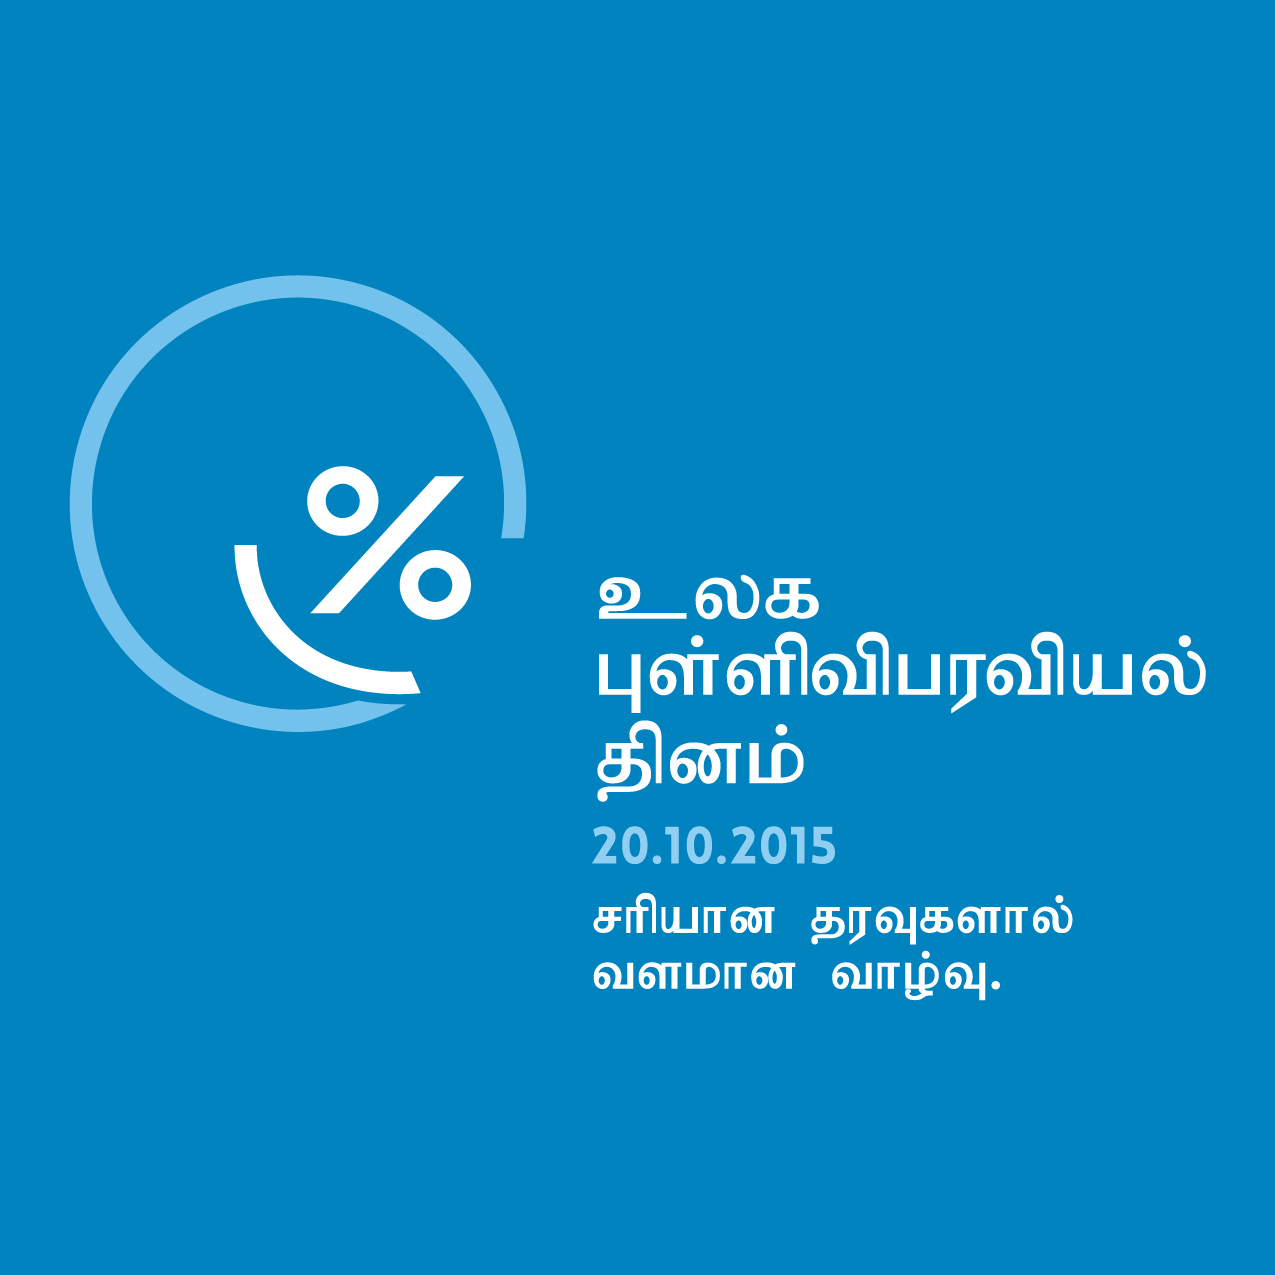 World Statistics Day Logo in Tamil